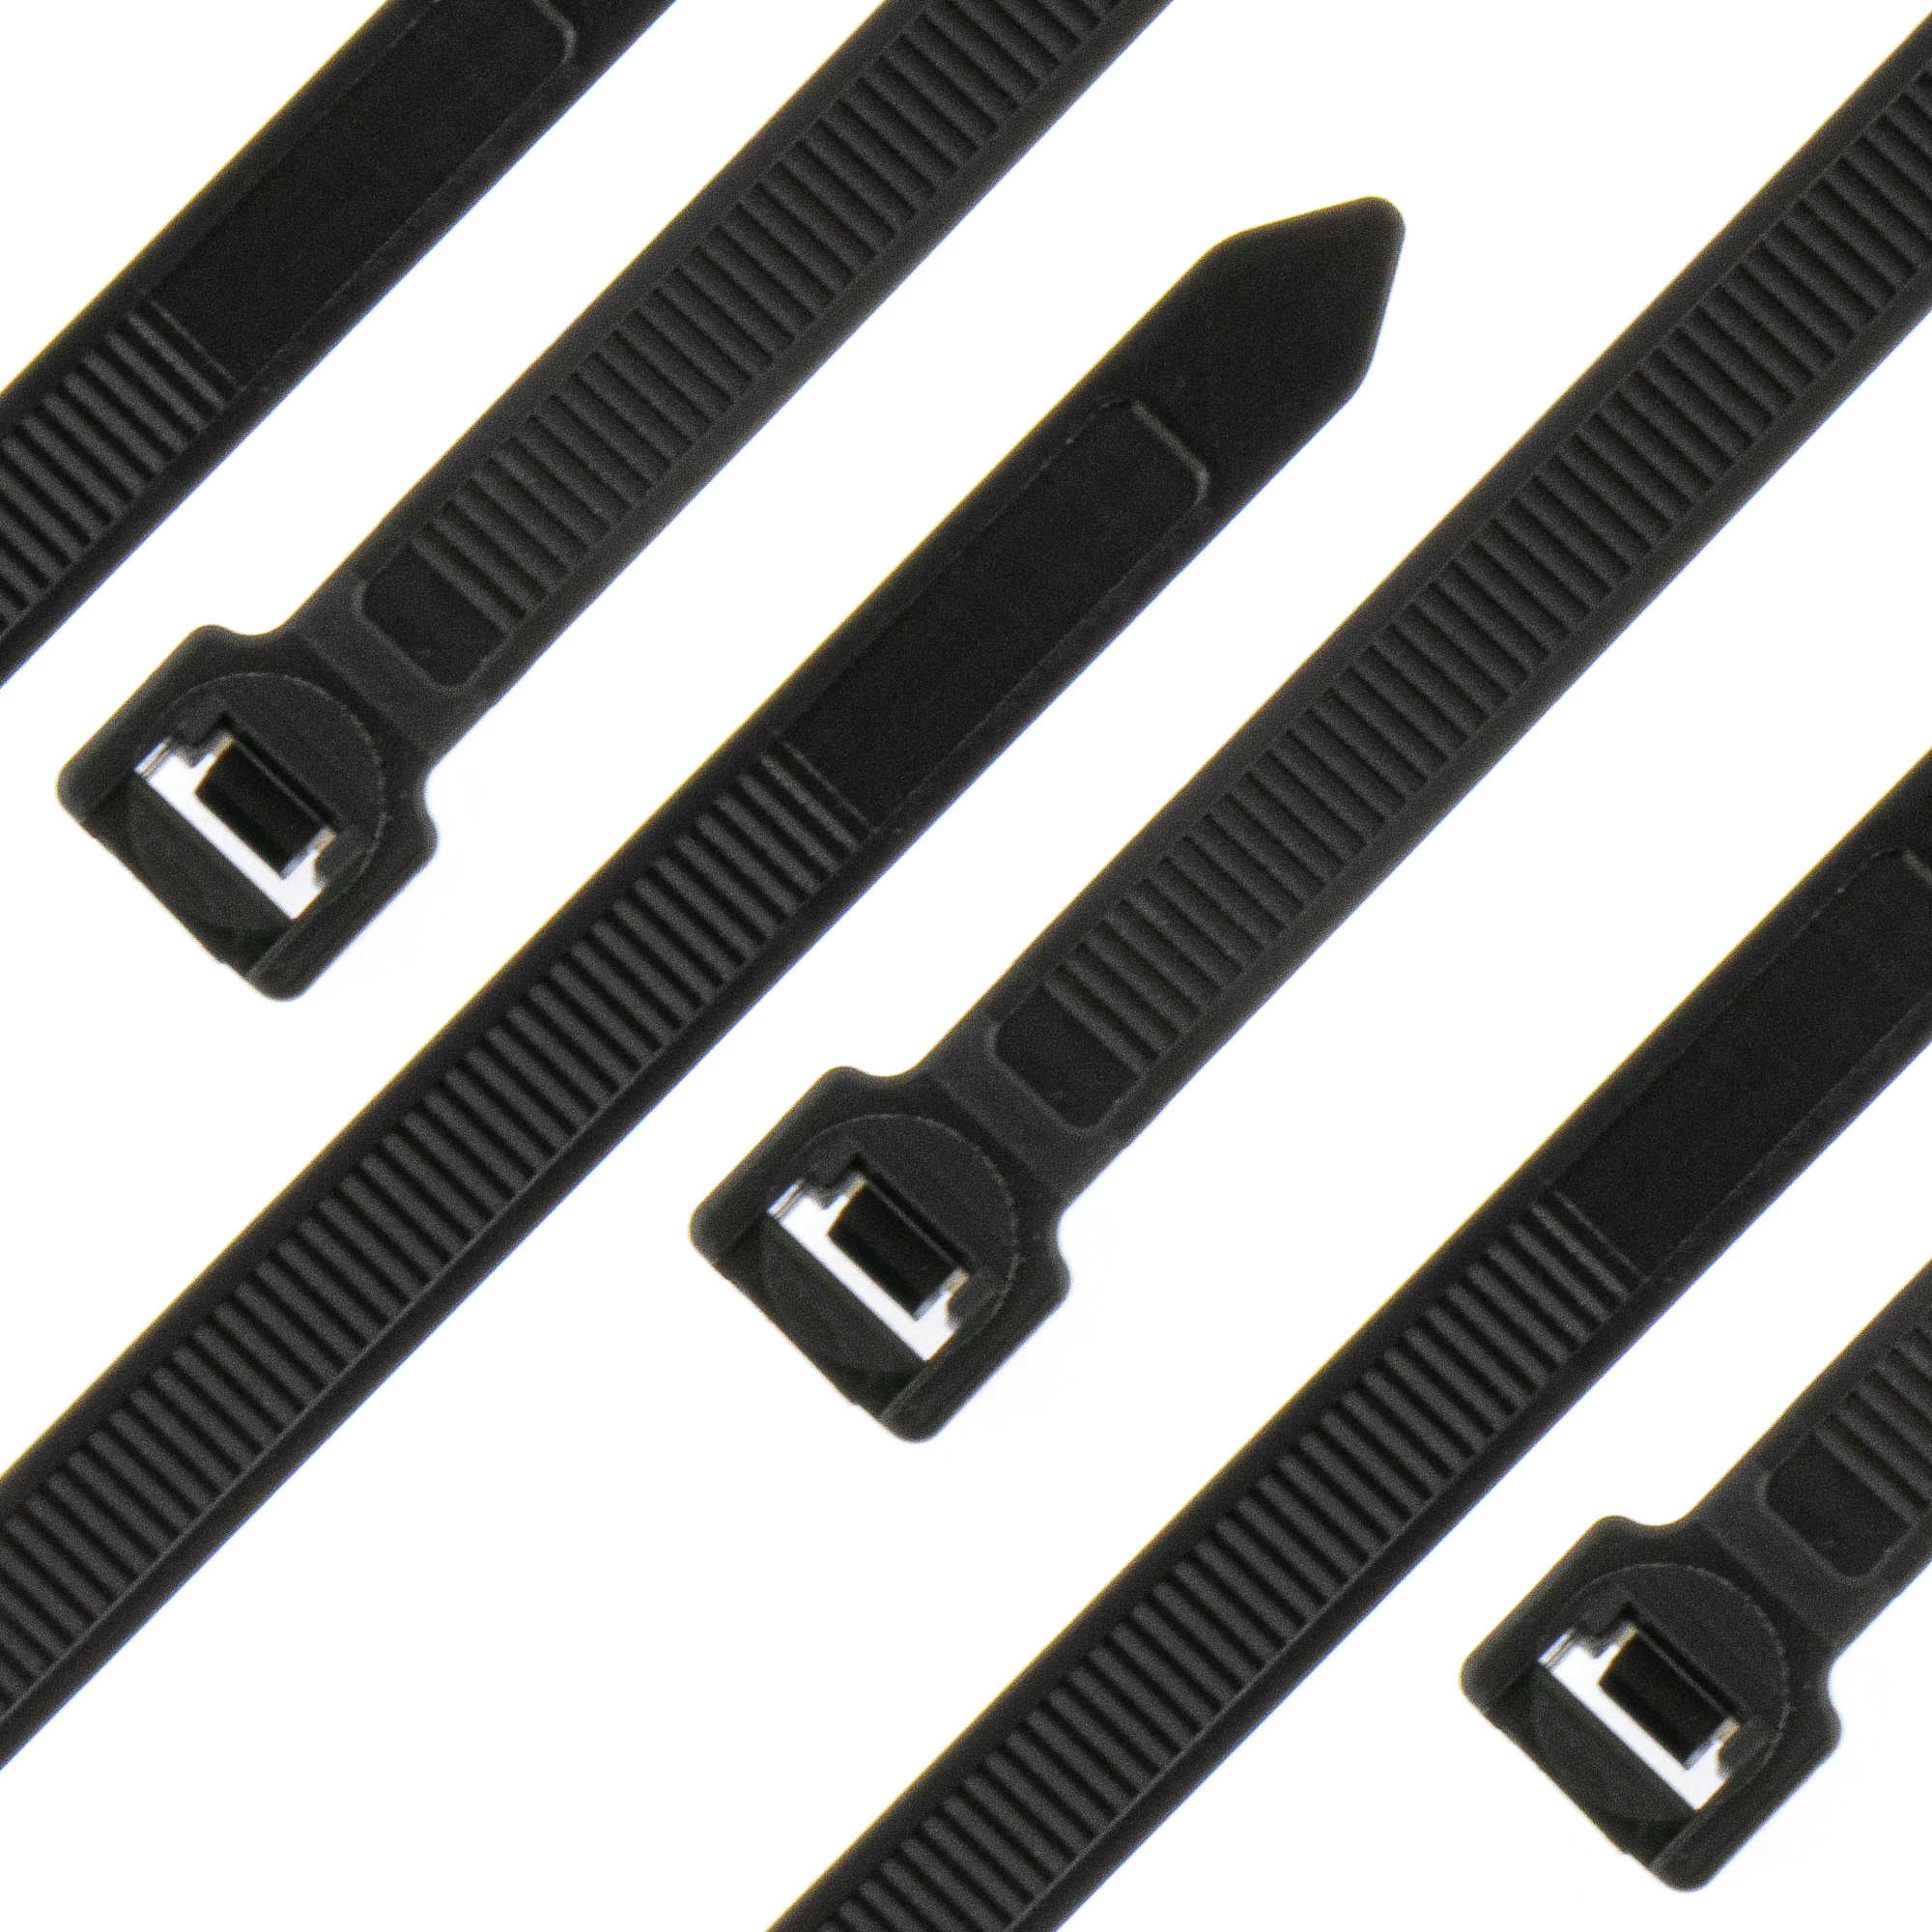 Cable tie self-locking 450 x 7,6mm, black, 100PCS